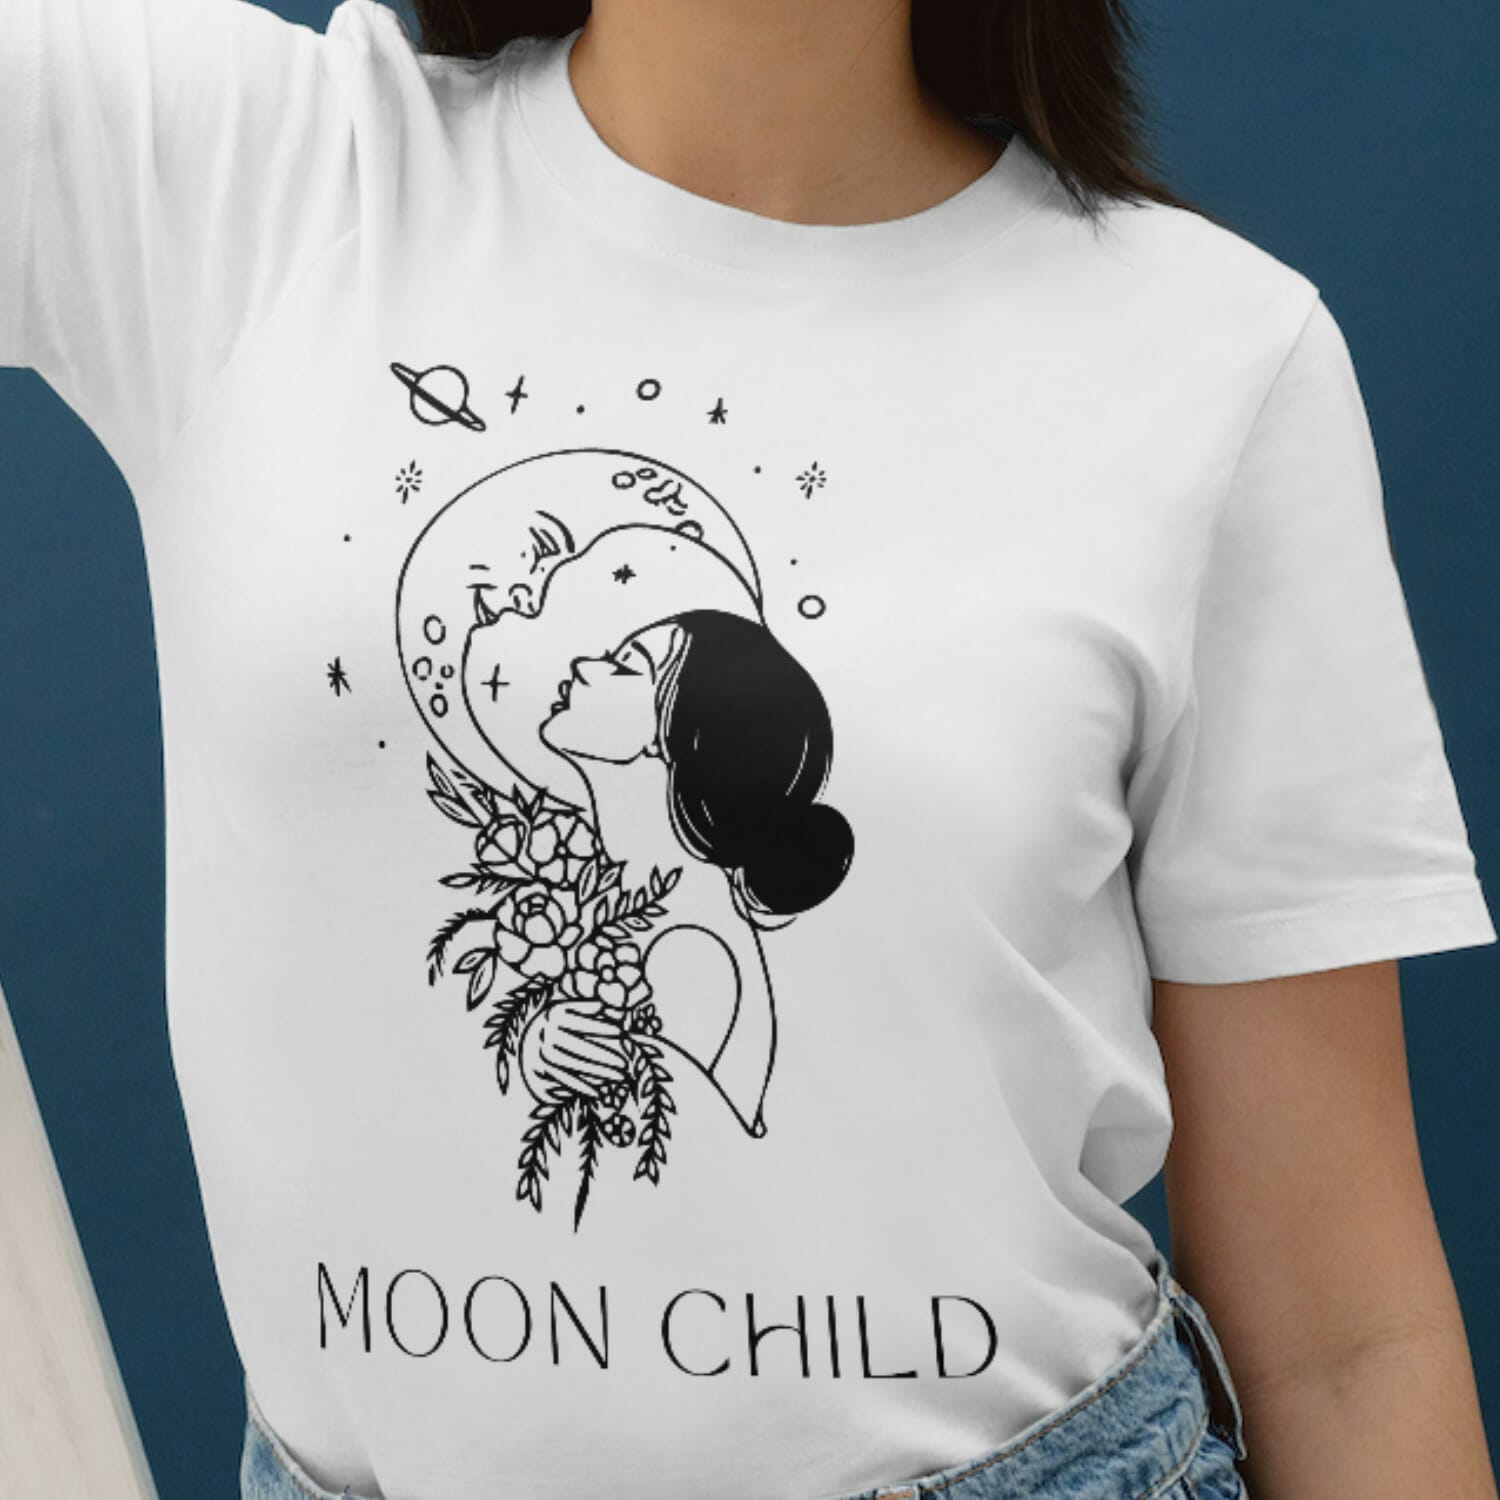 Boho style Moon child Tshirt design